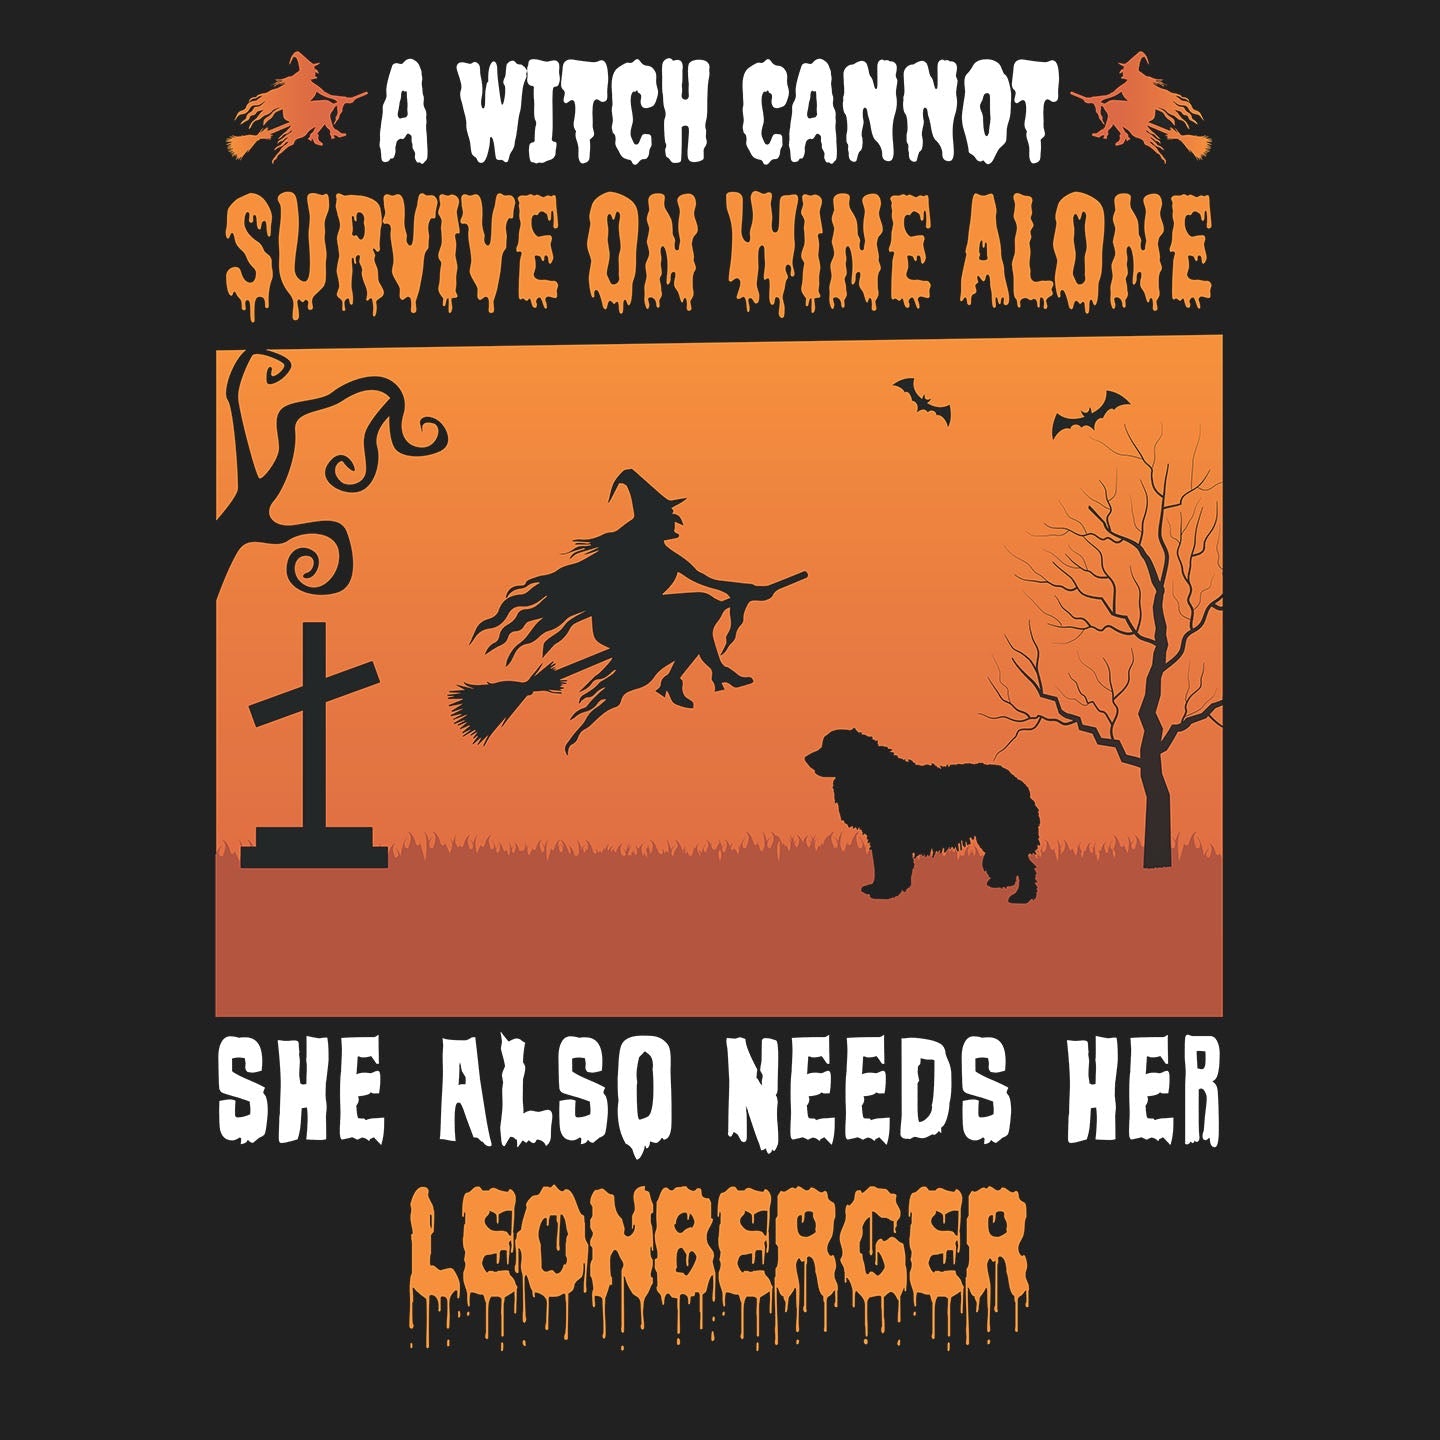 A Witch Needs Her Leonberger - Women's V-Neck T-Shirt